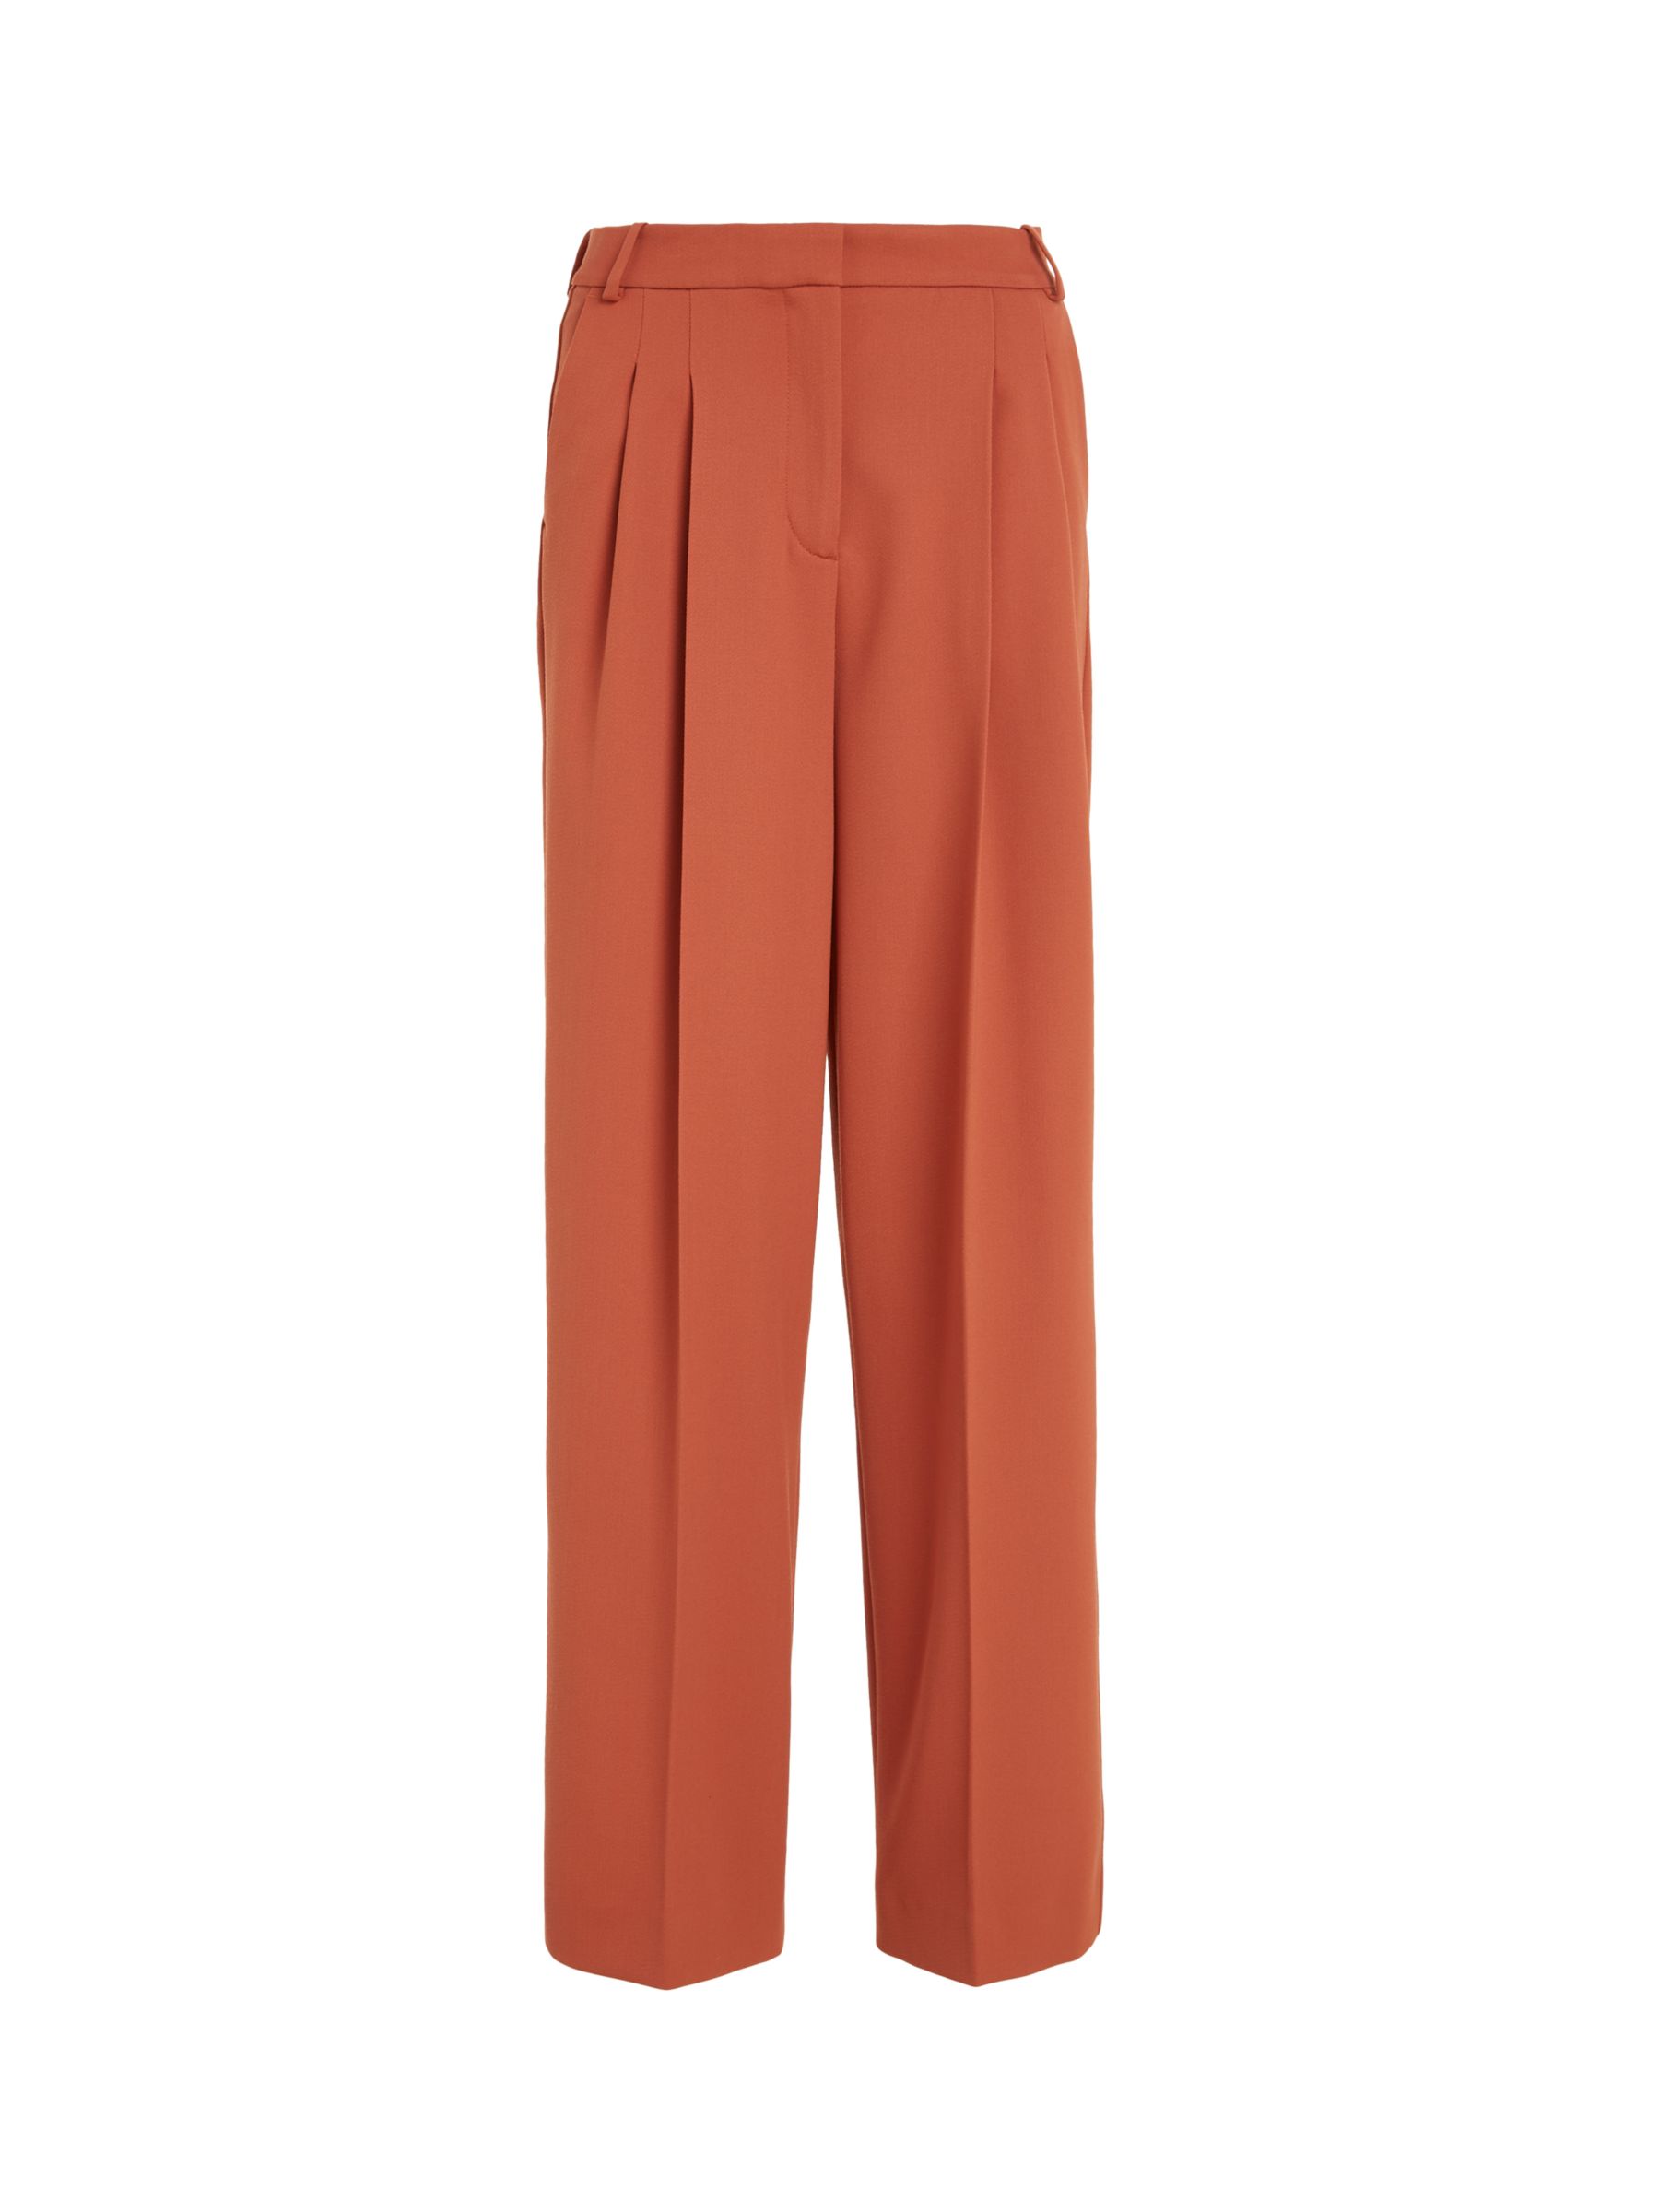 Calvin Klein Wool Blend Trousers, Brown, 6